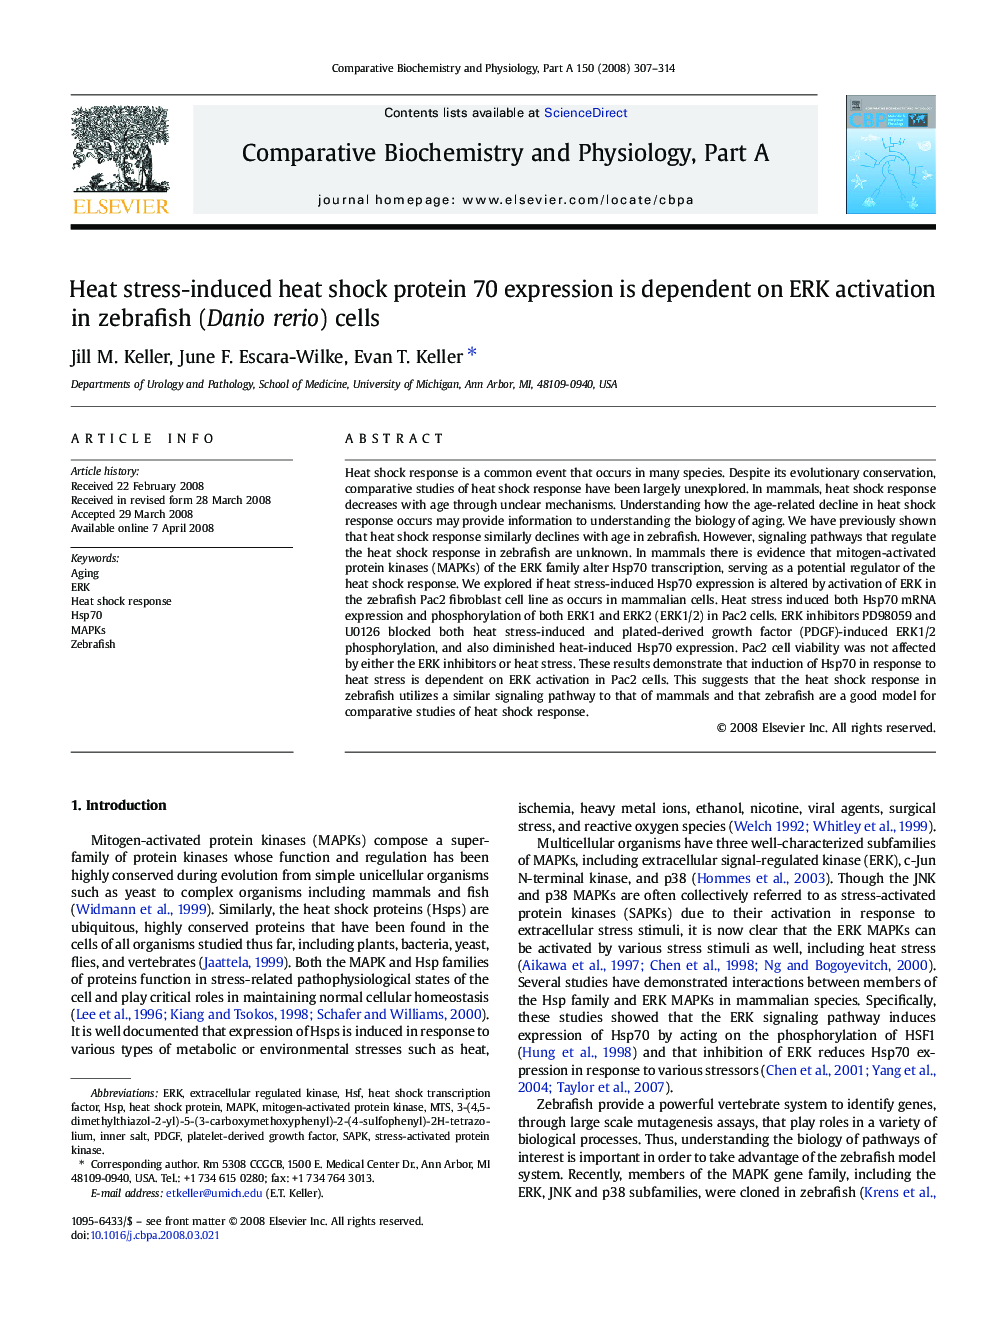 Heat stress-induced heat shock protein 70 expression is dependent on ERK activation in zebrafish (Danio rerio) cells